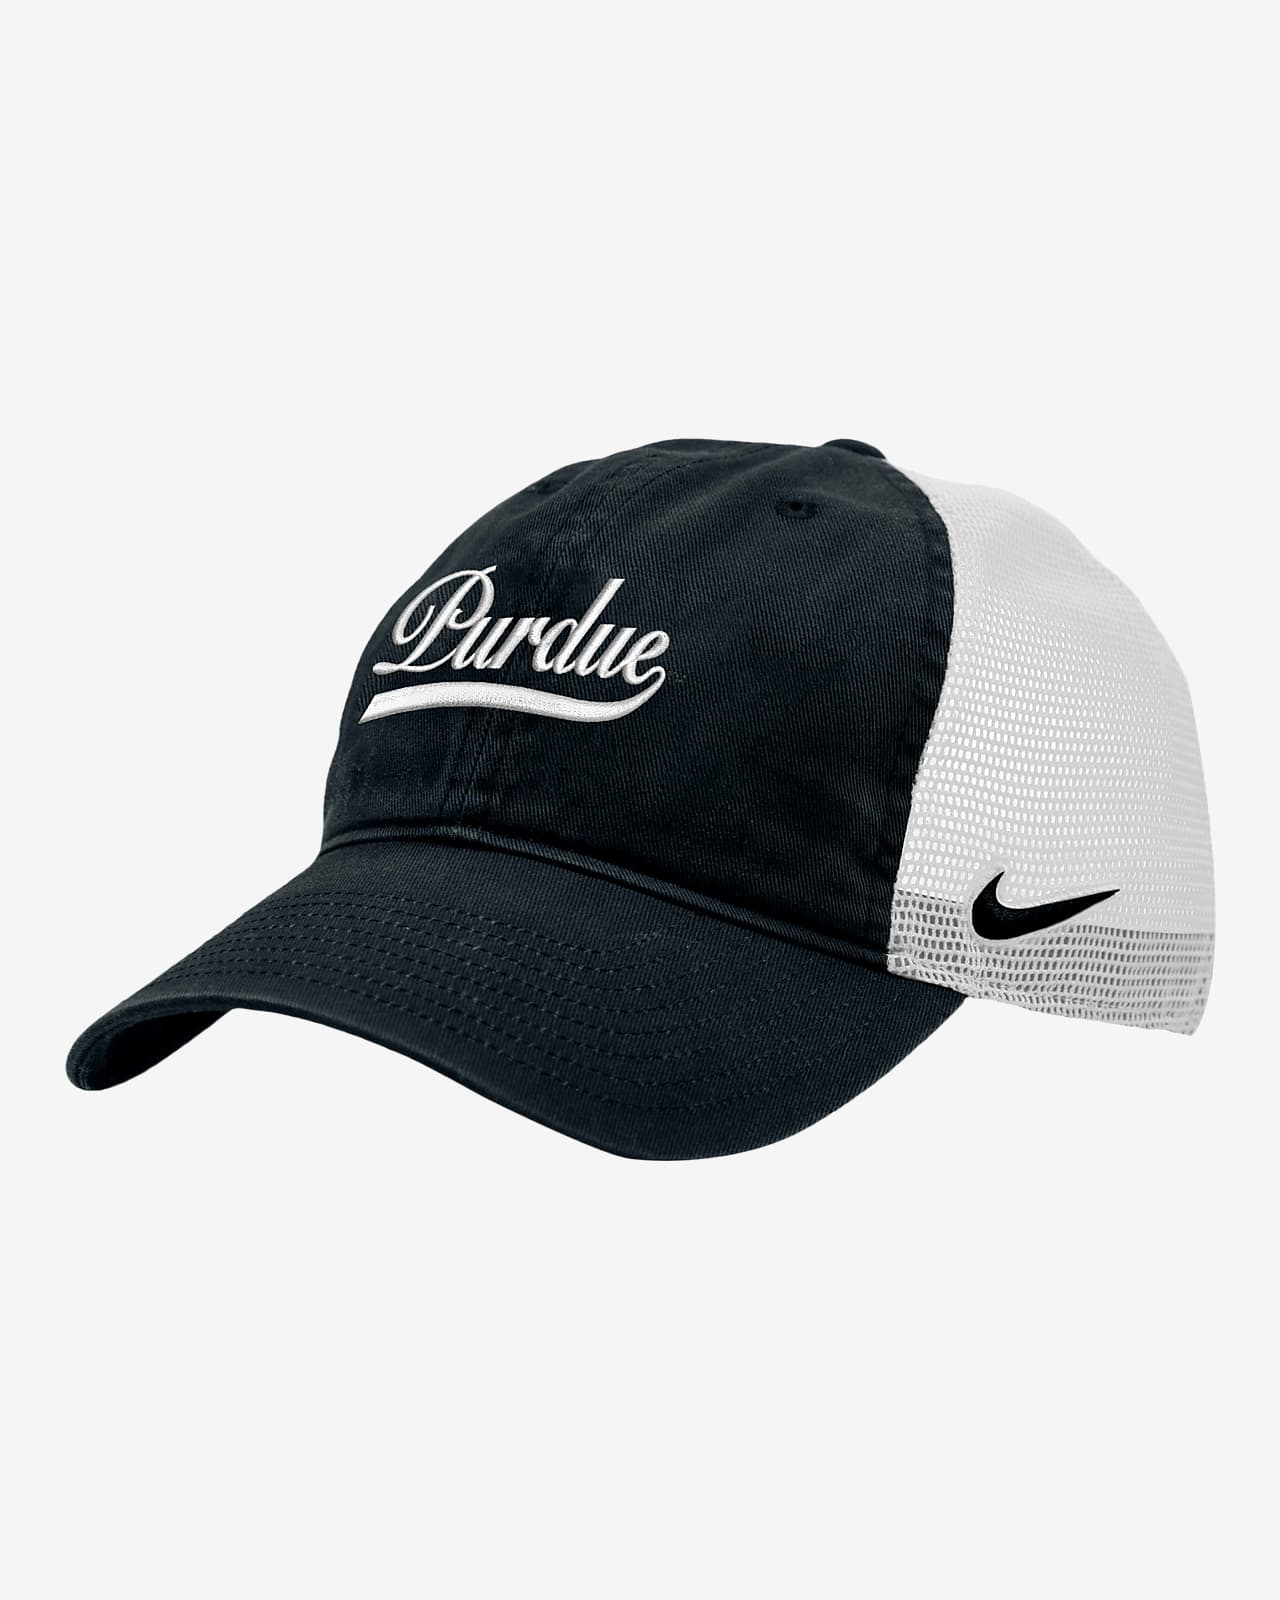 Purdue Heritage86 Nike College Trucker Hat